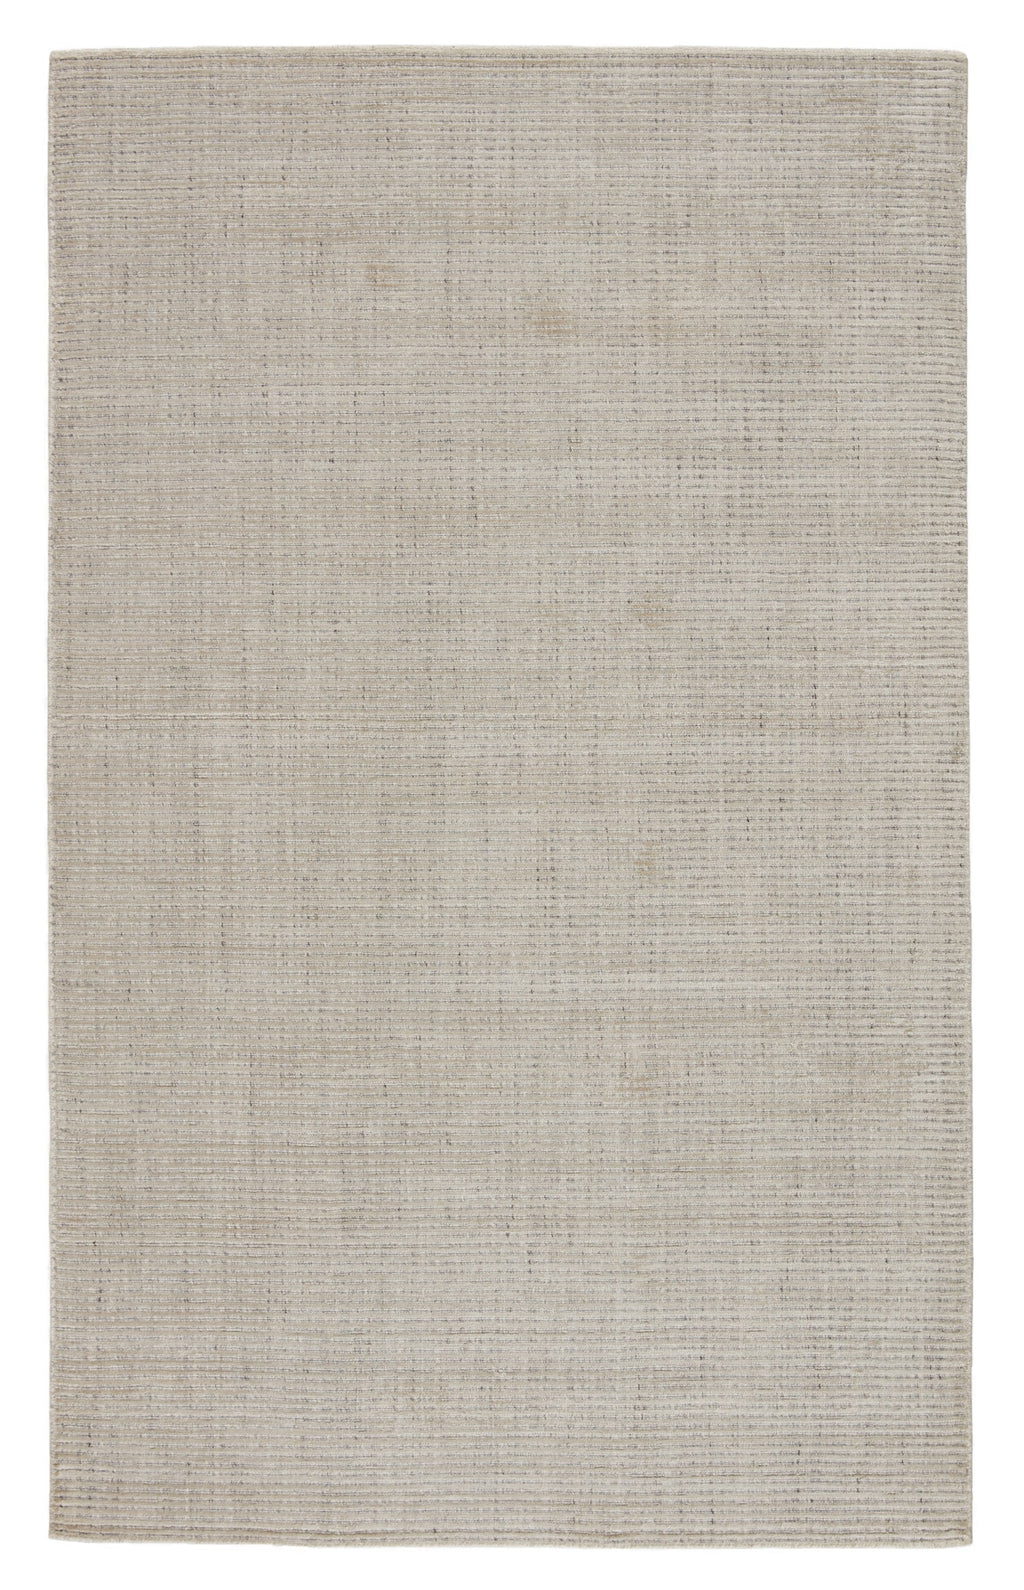 basis solid rug in cement granite gray design by jaipur 1